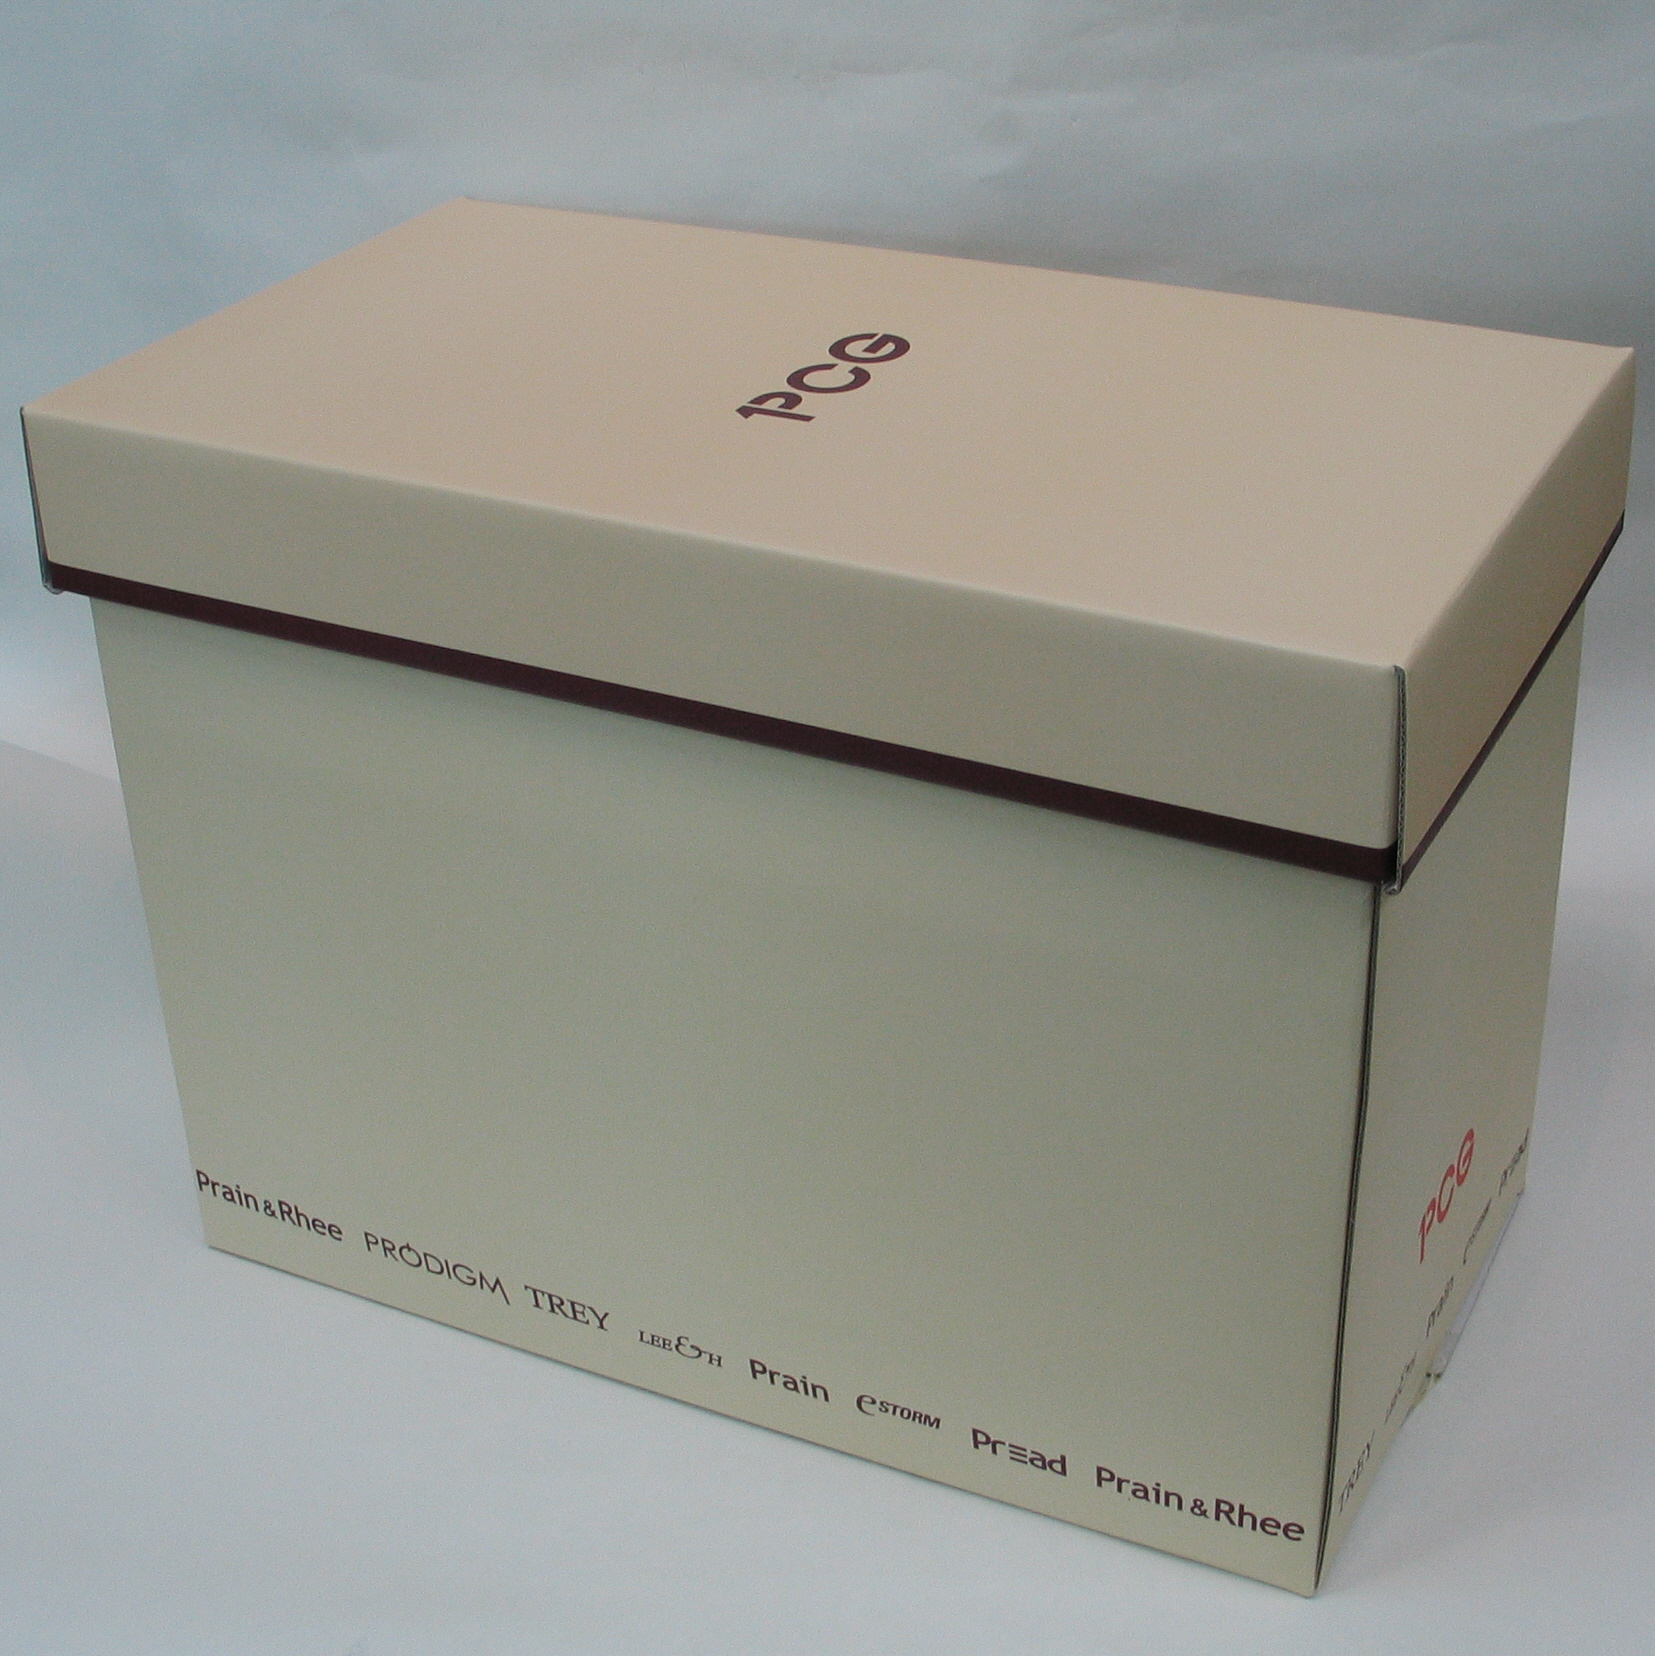 Pandora box for New PCGer